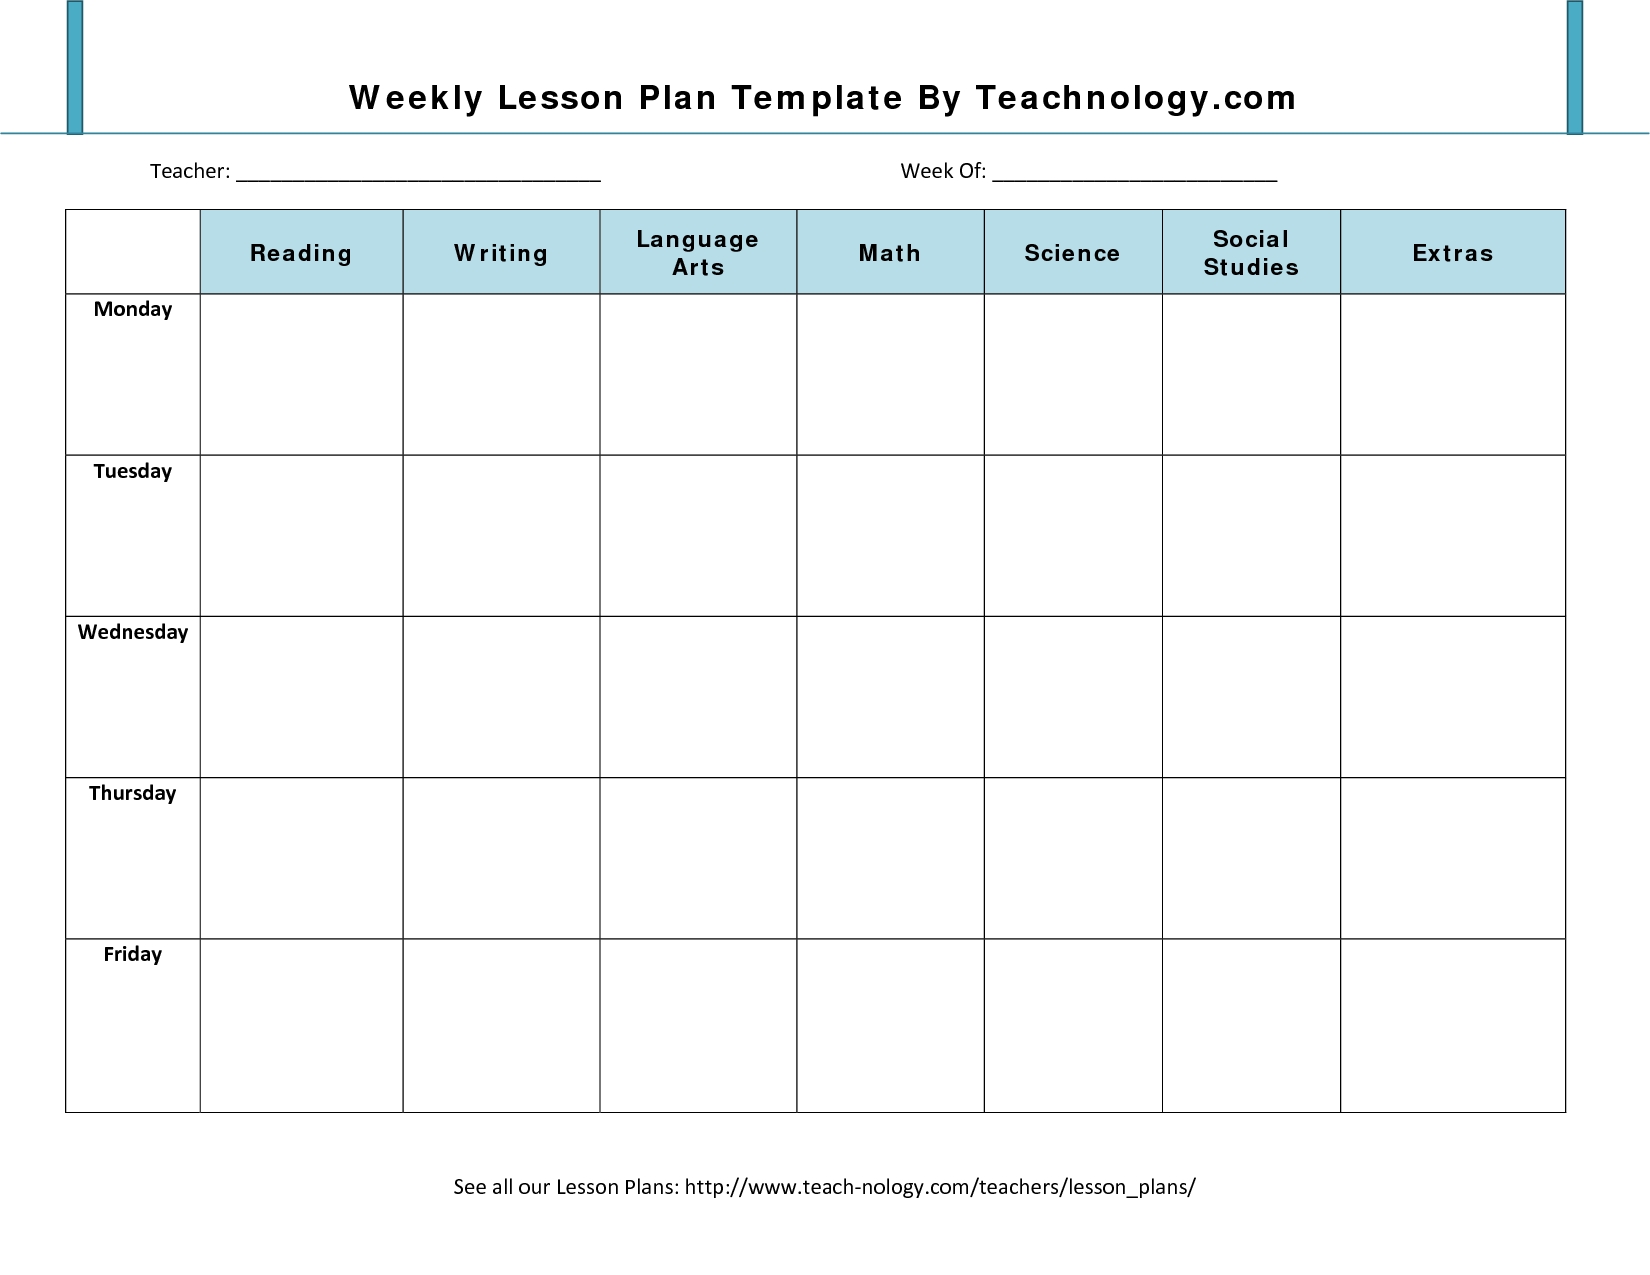 Weekly Lesson Plan Template - Beepmunk regarding Weekly Calander Lesson Plan Template